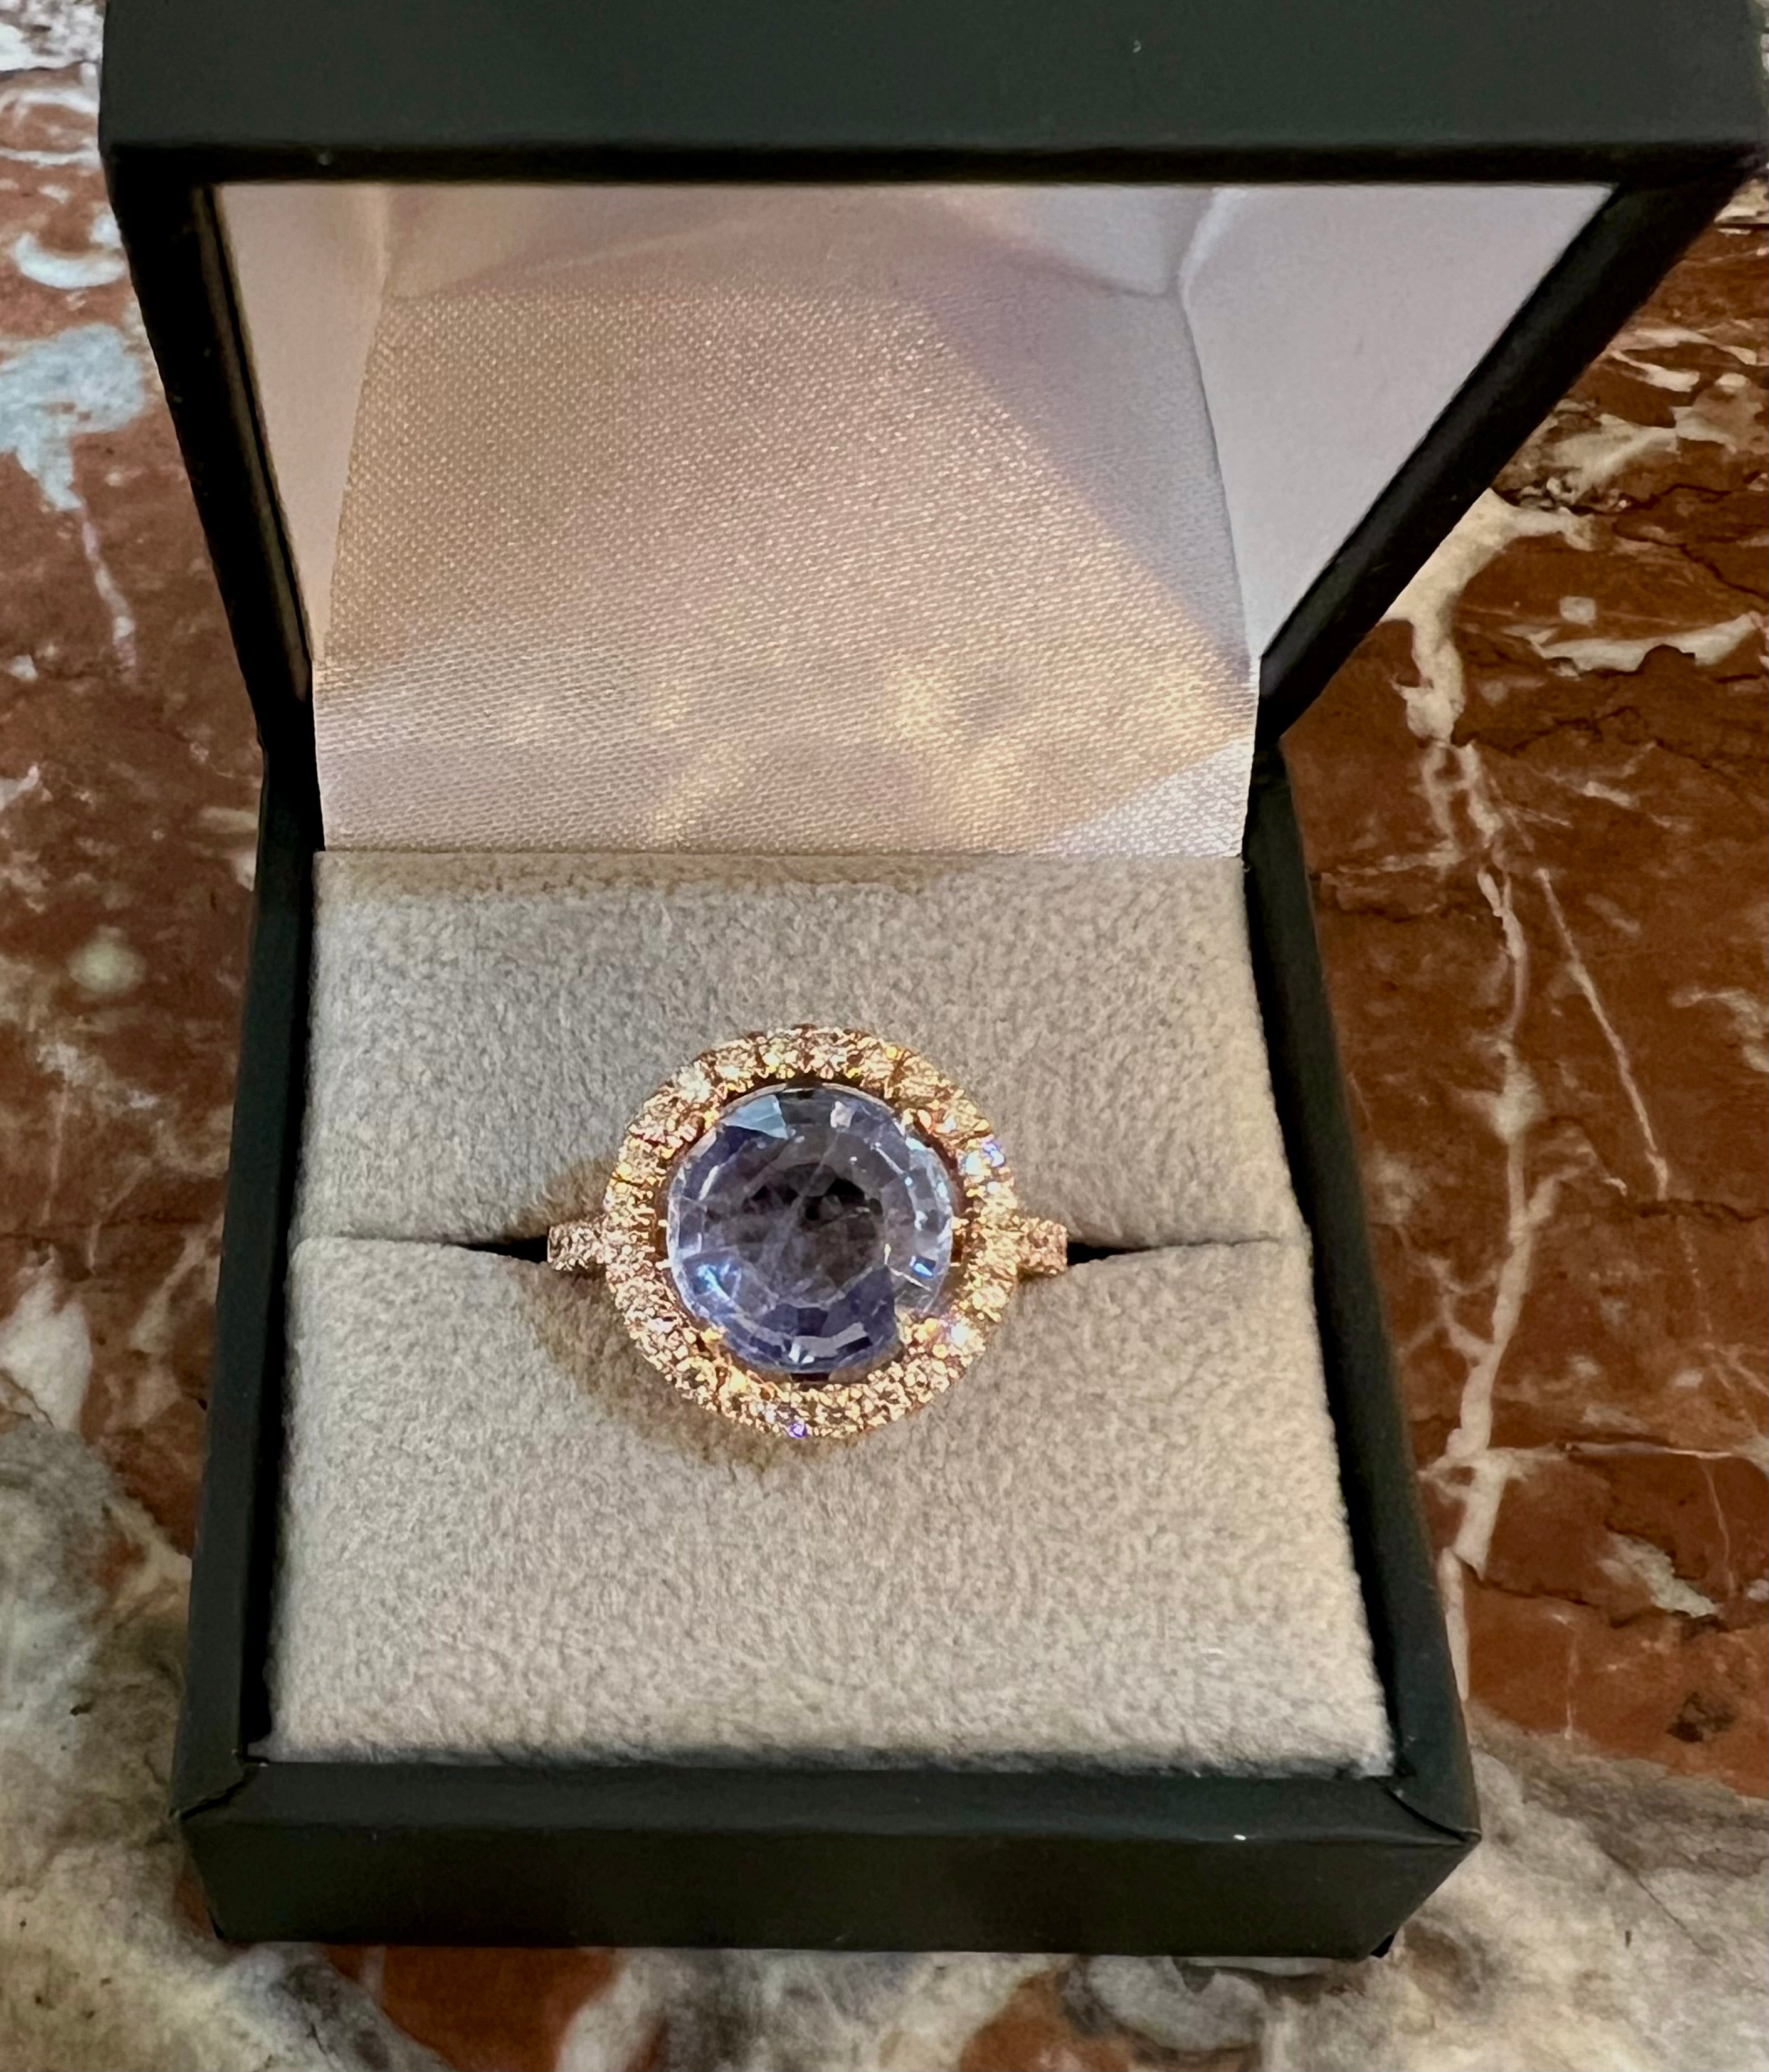 Certified 3.72 Carats Unheated Ceylon Sapphire Diamonds 18 Carats Rose Gold Ring